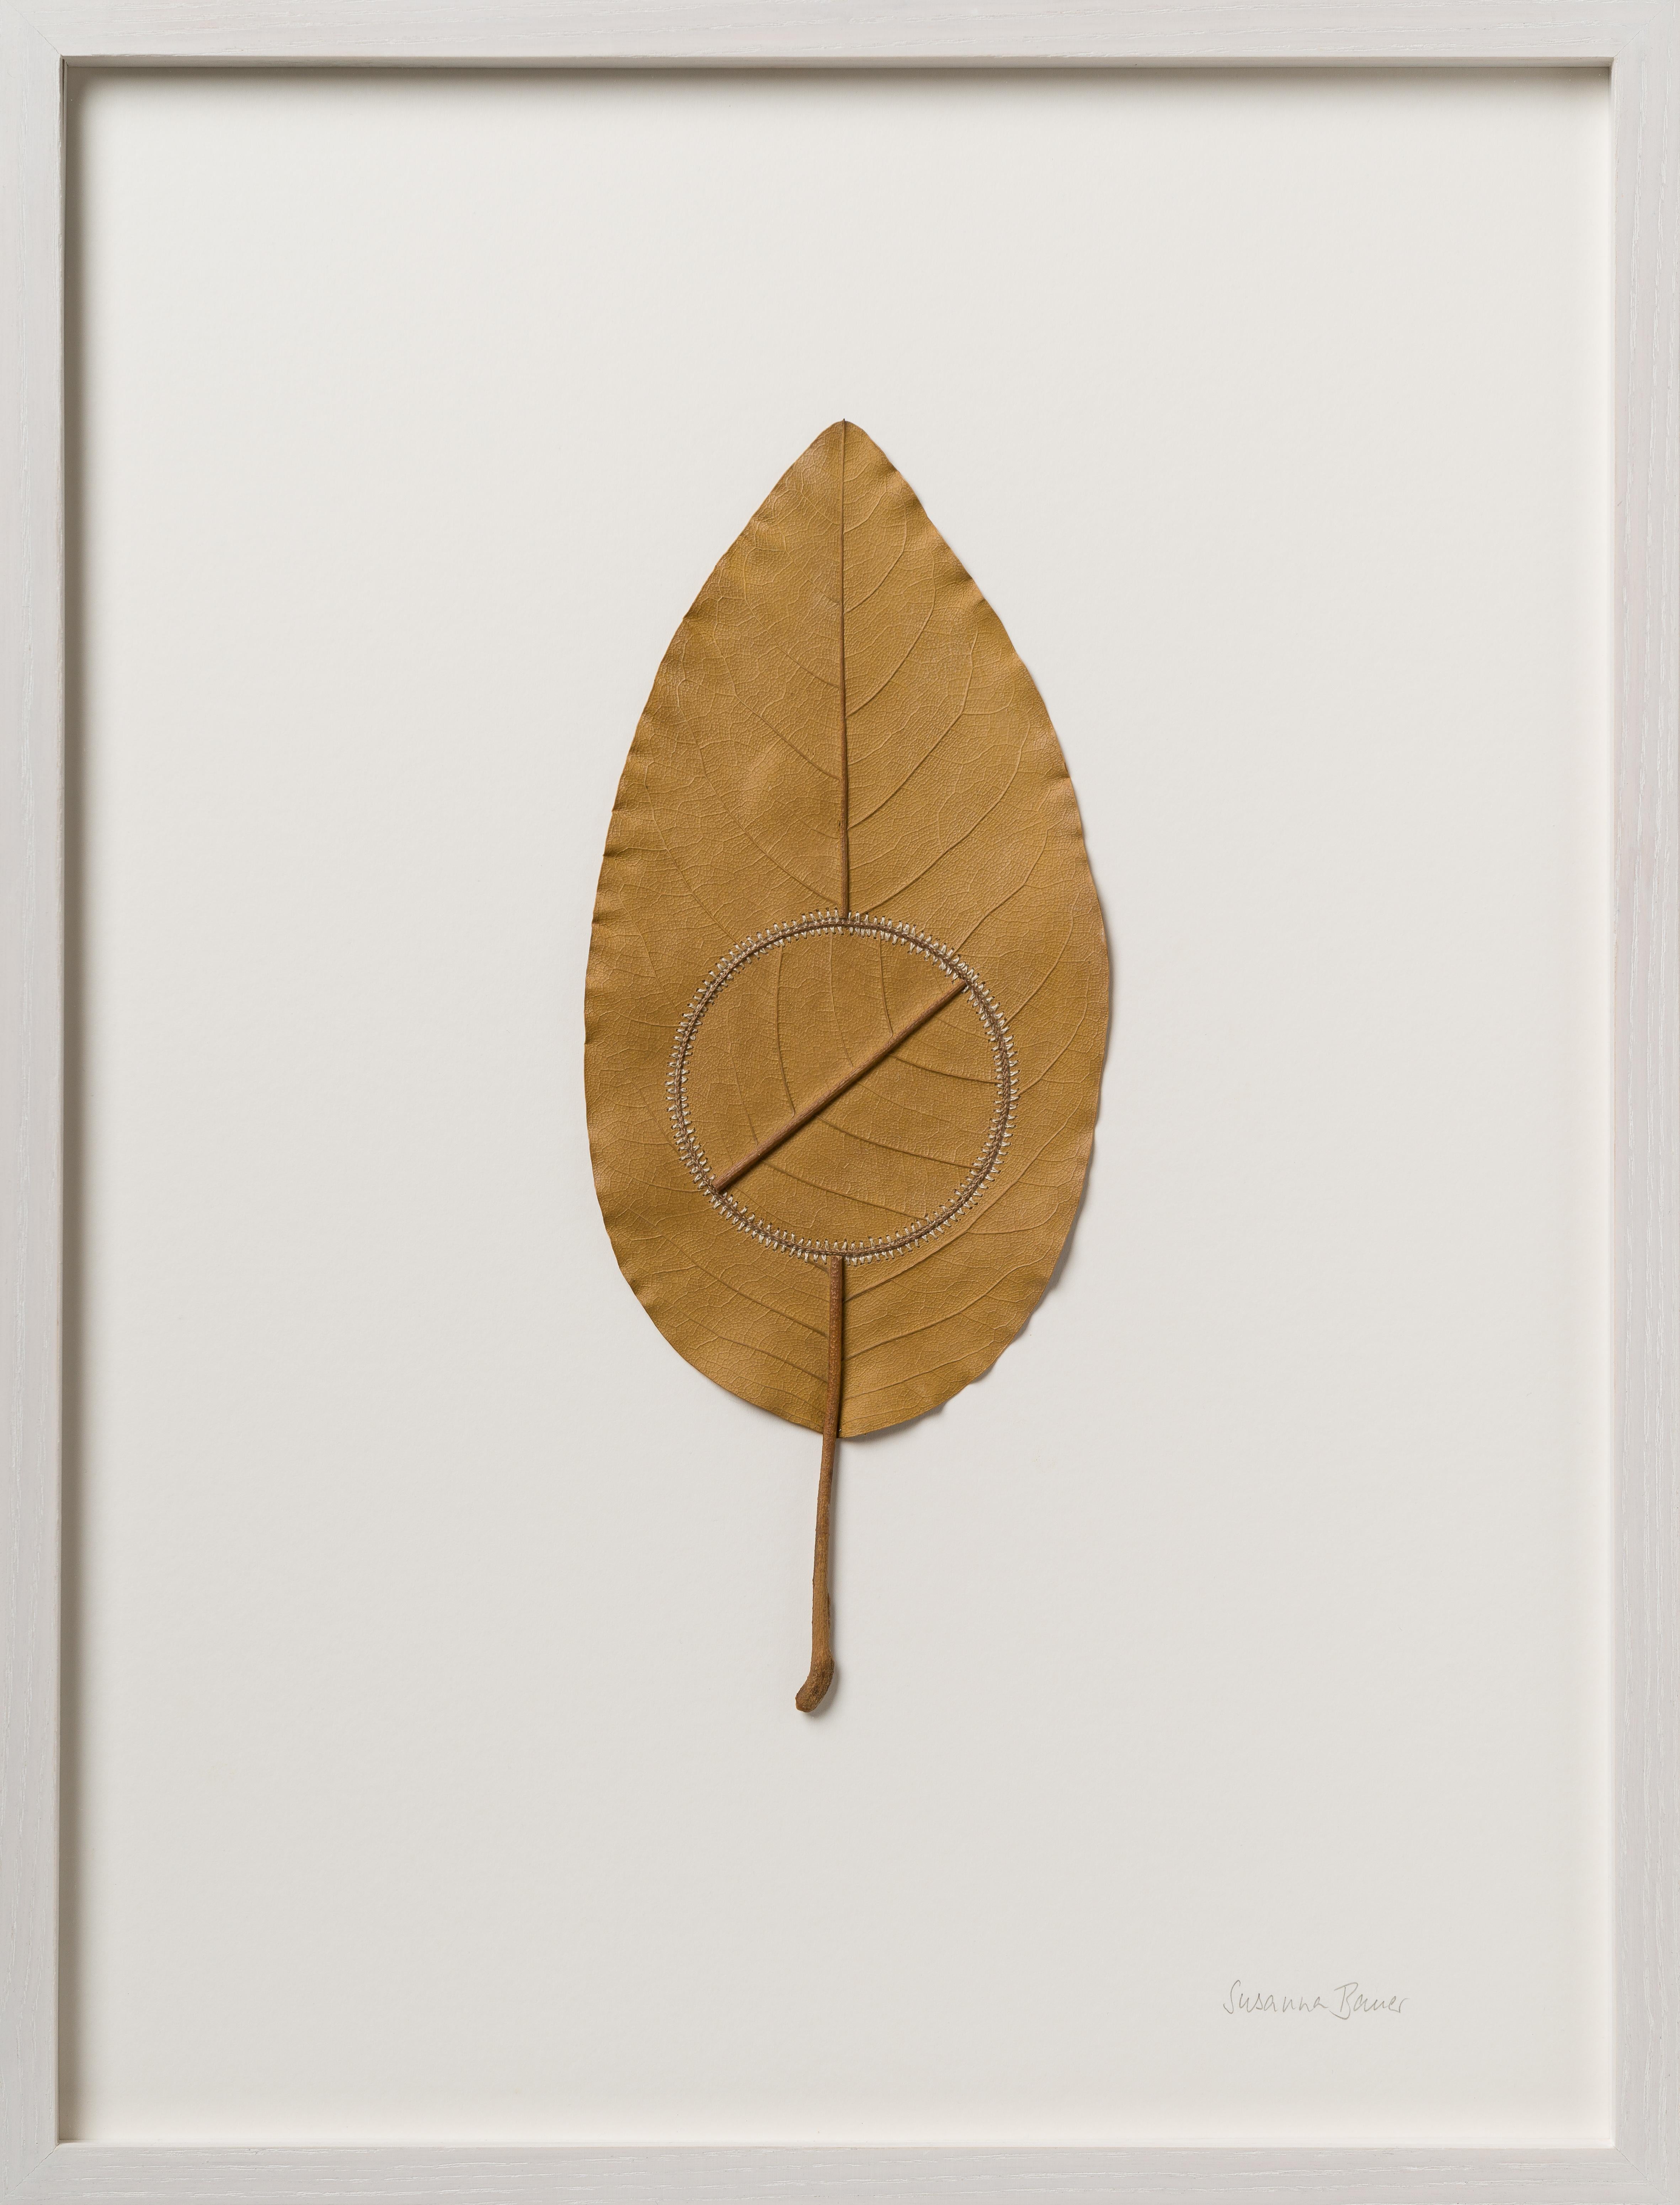 Navigation XV - contemporary crochet dried magnolia leaf nature art framed - Mixed Media Art by Susanna Bauer